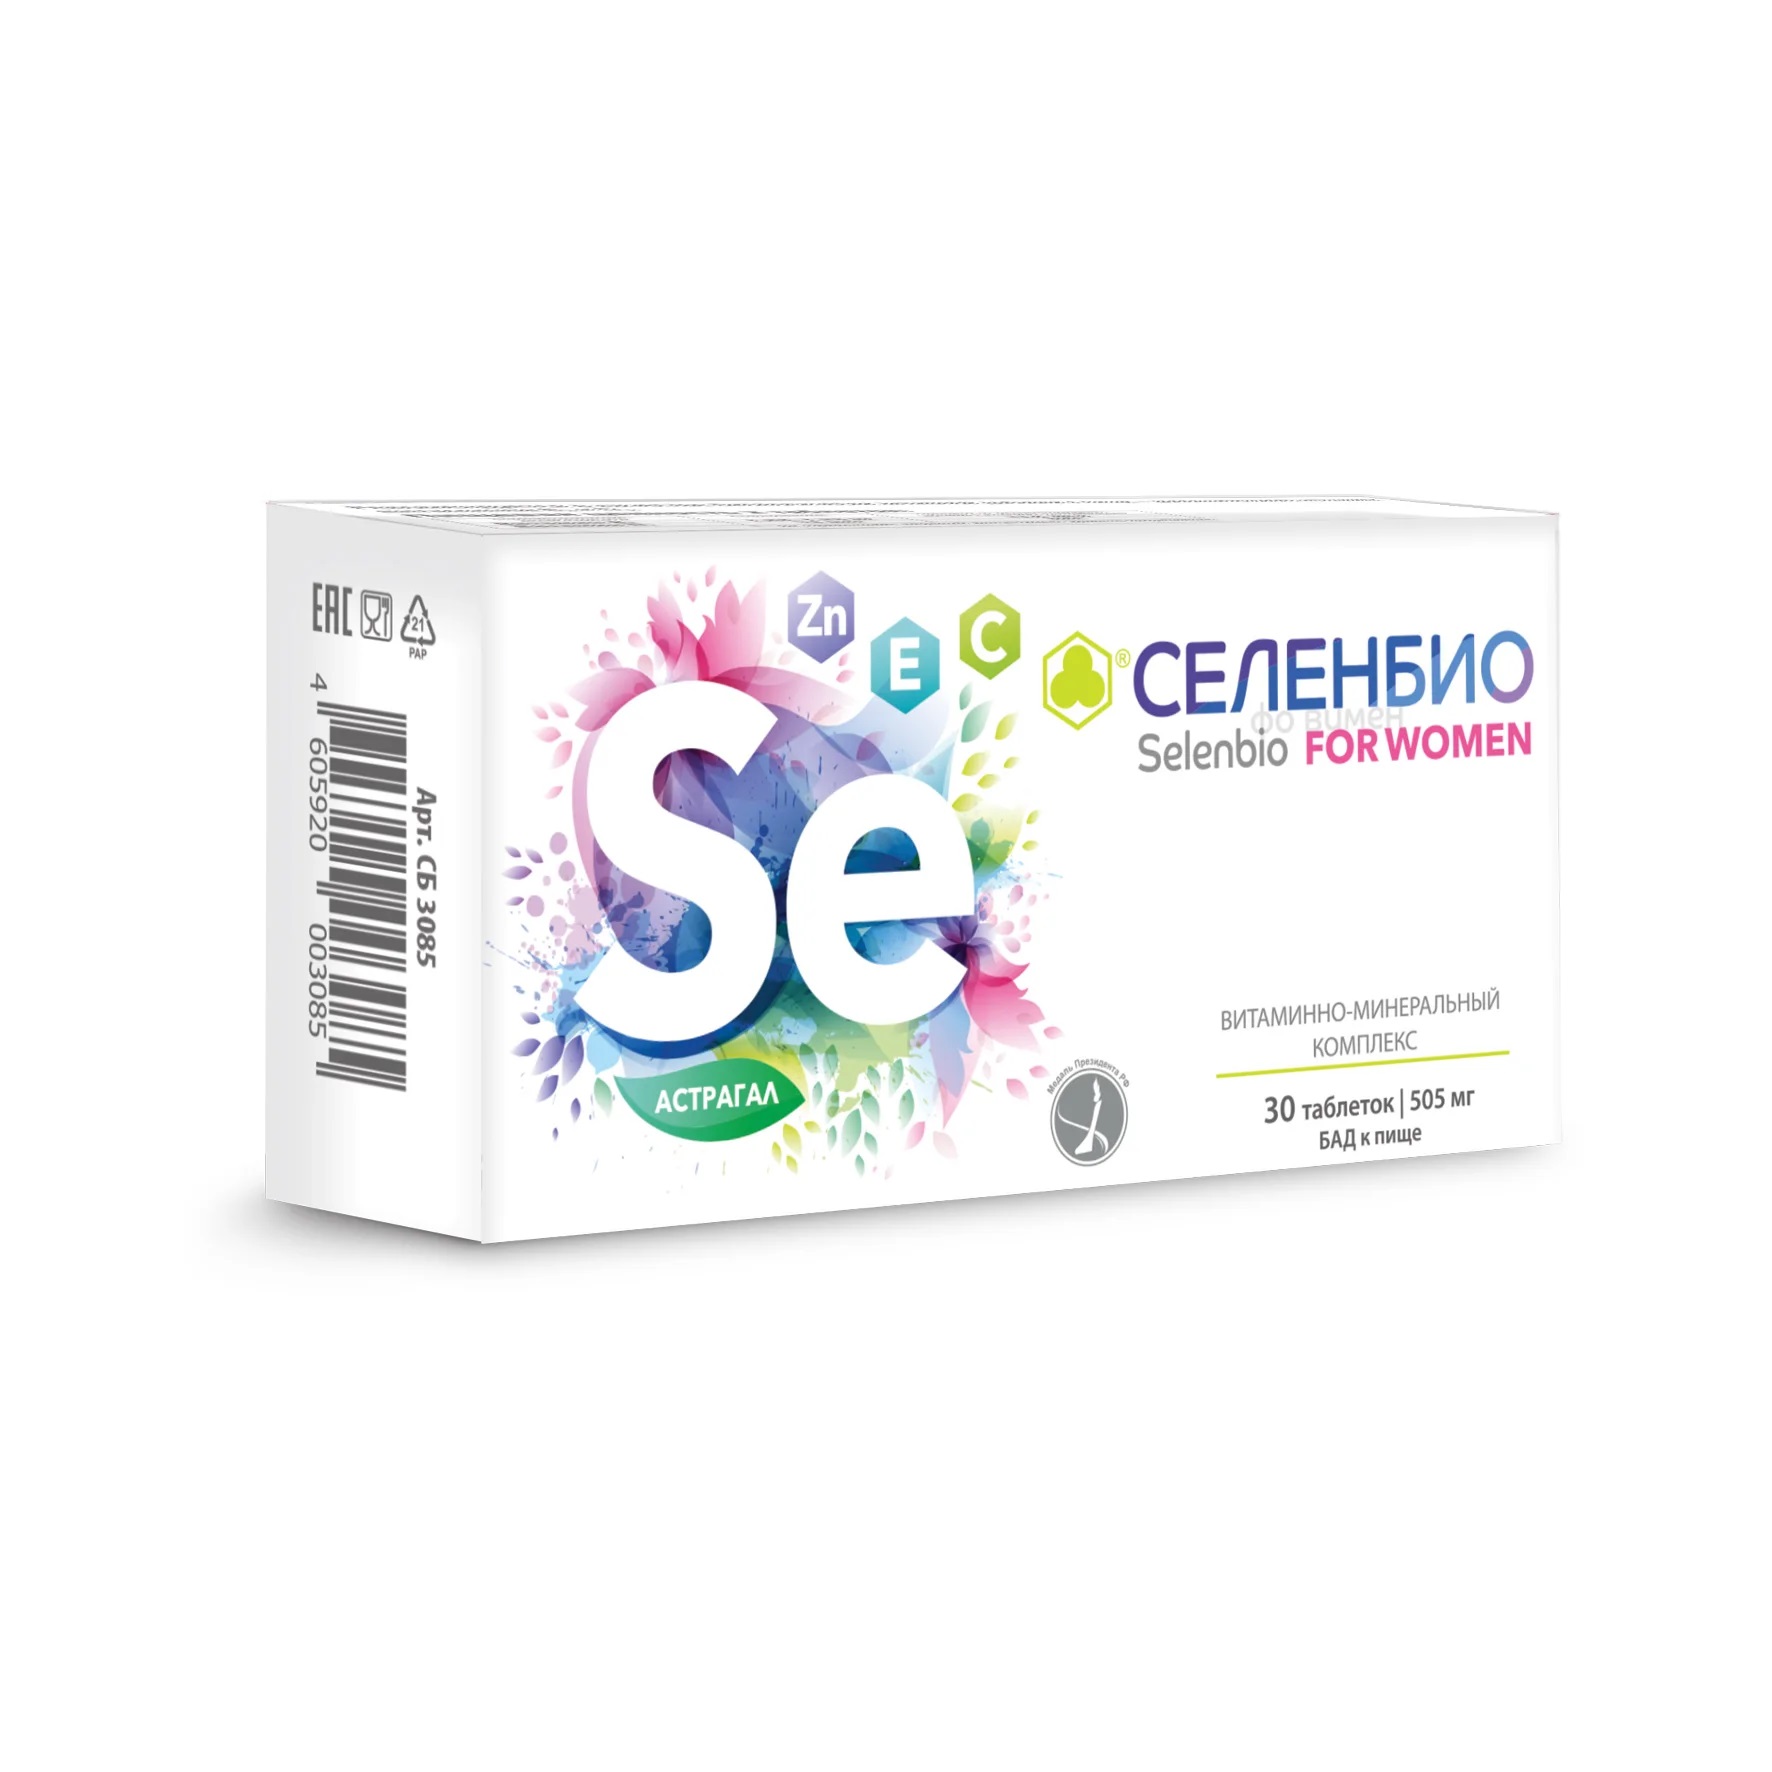 Селенбио for women, таблетки 505 мг, 30 шт. unretouched women